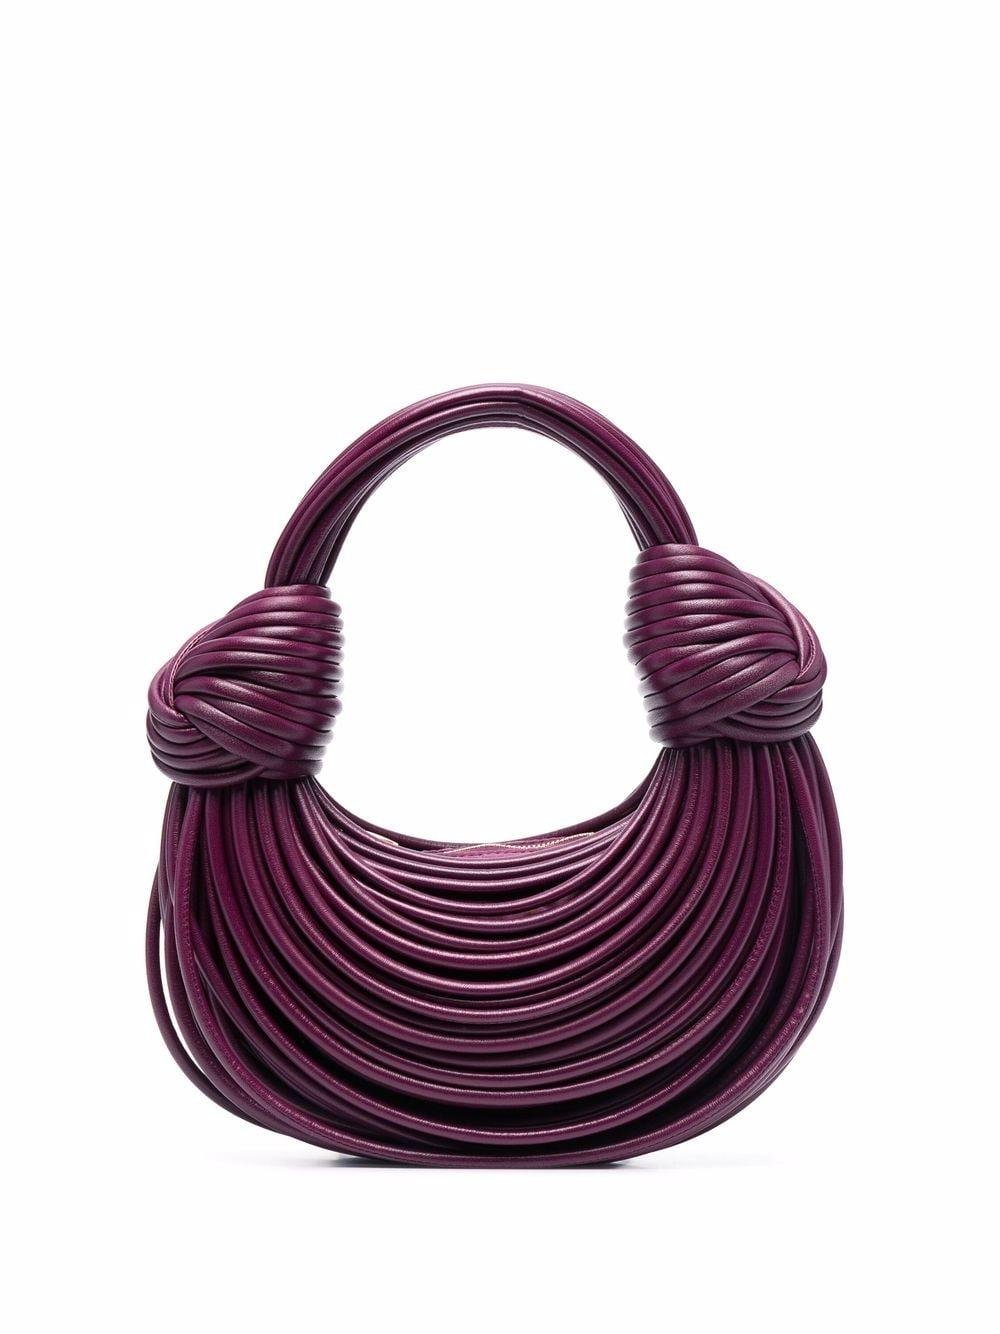 Bottega Veneta Double Knot Tubular Leather Tote Bag in Purple